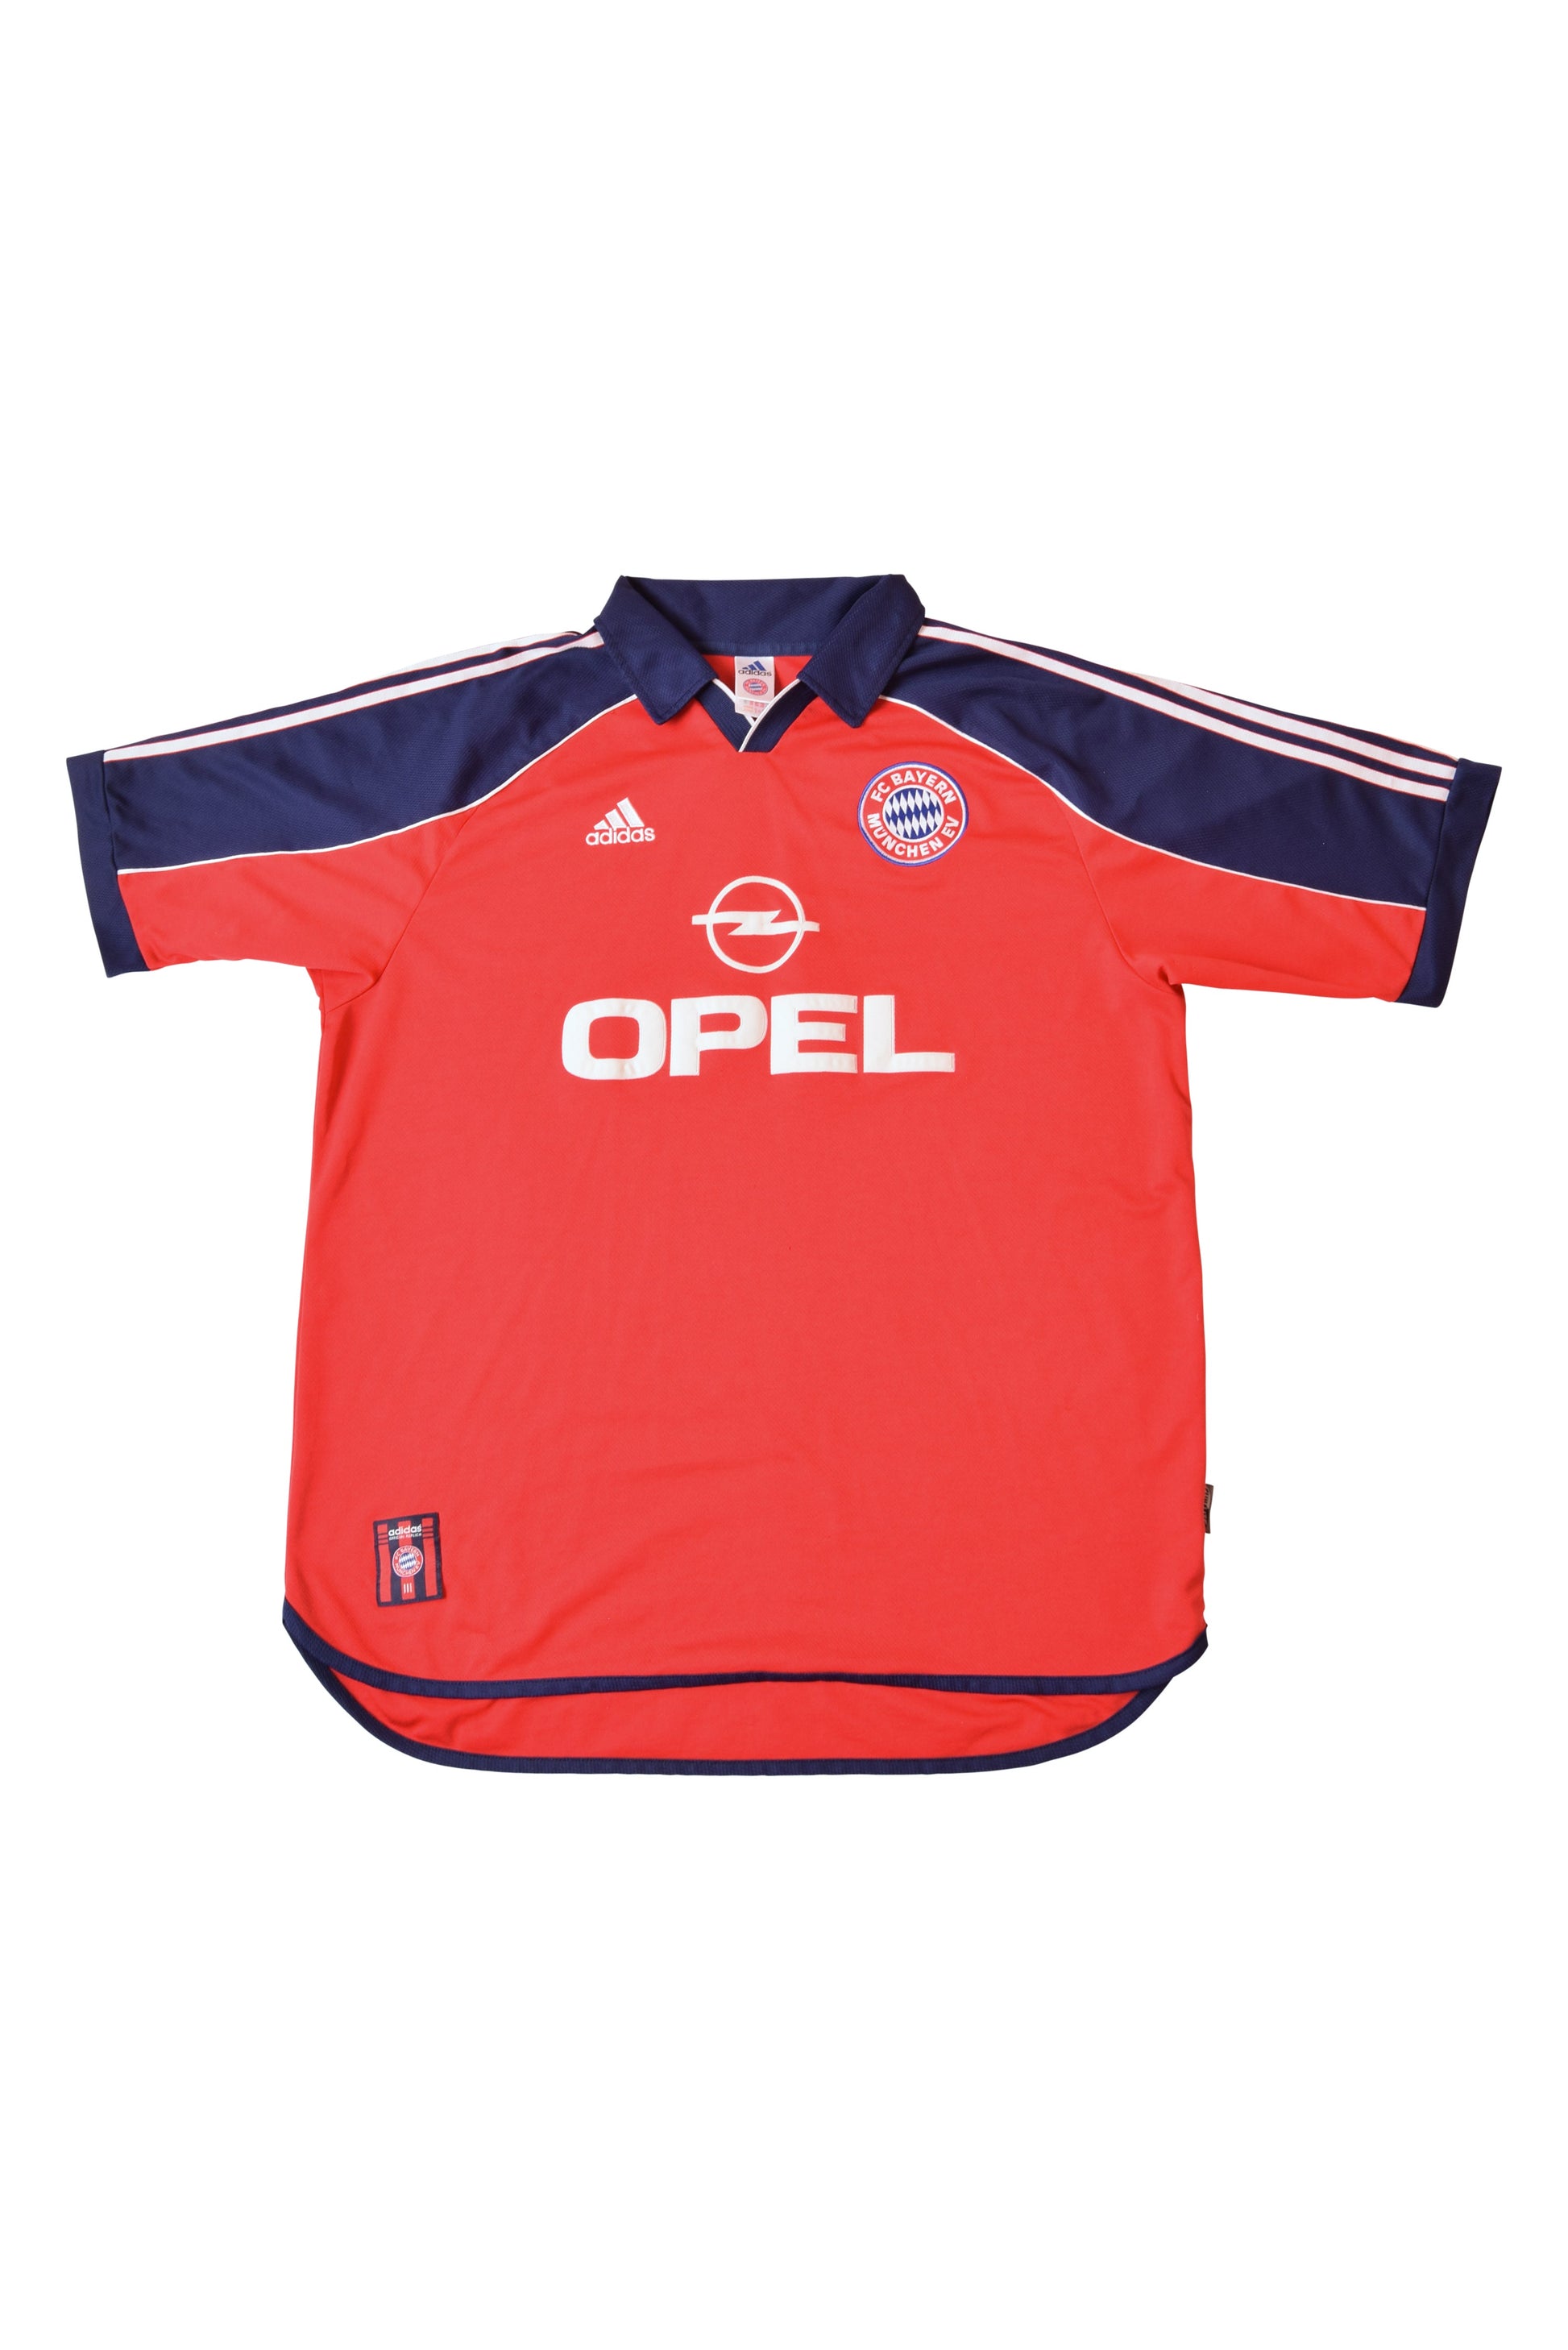 Vintage Bayern Munchen Football Shirt Home Adidas 1999 - 2001  Size XXL Opel Red Blue